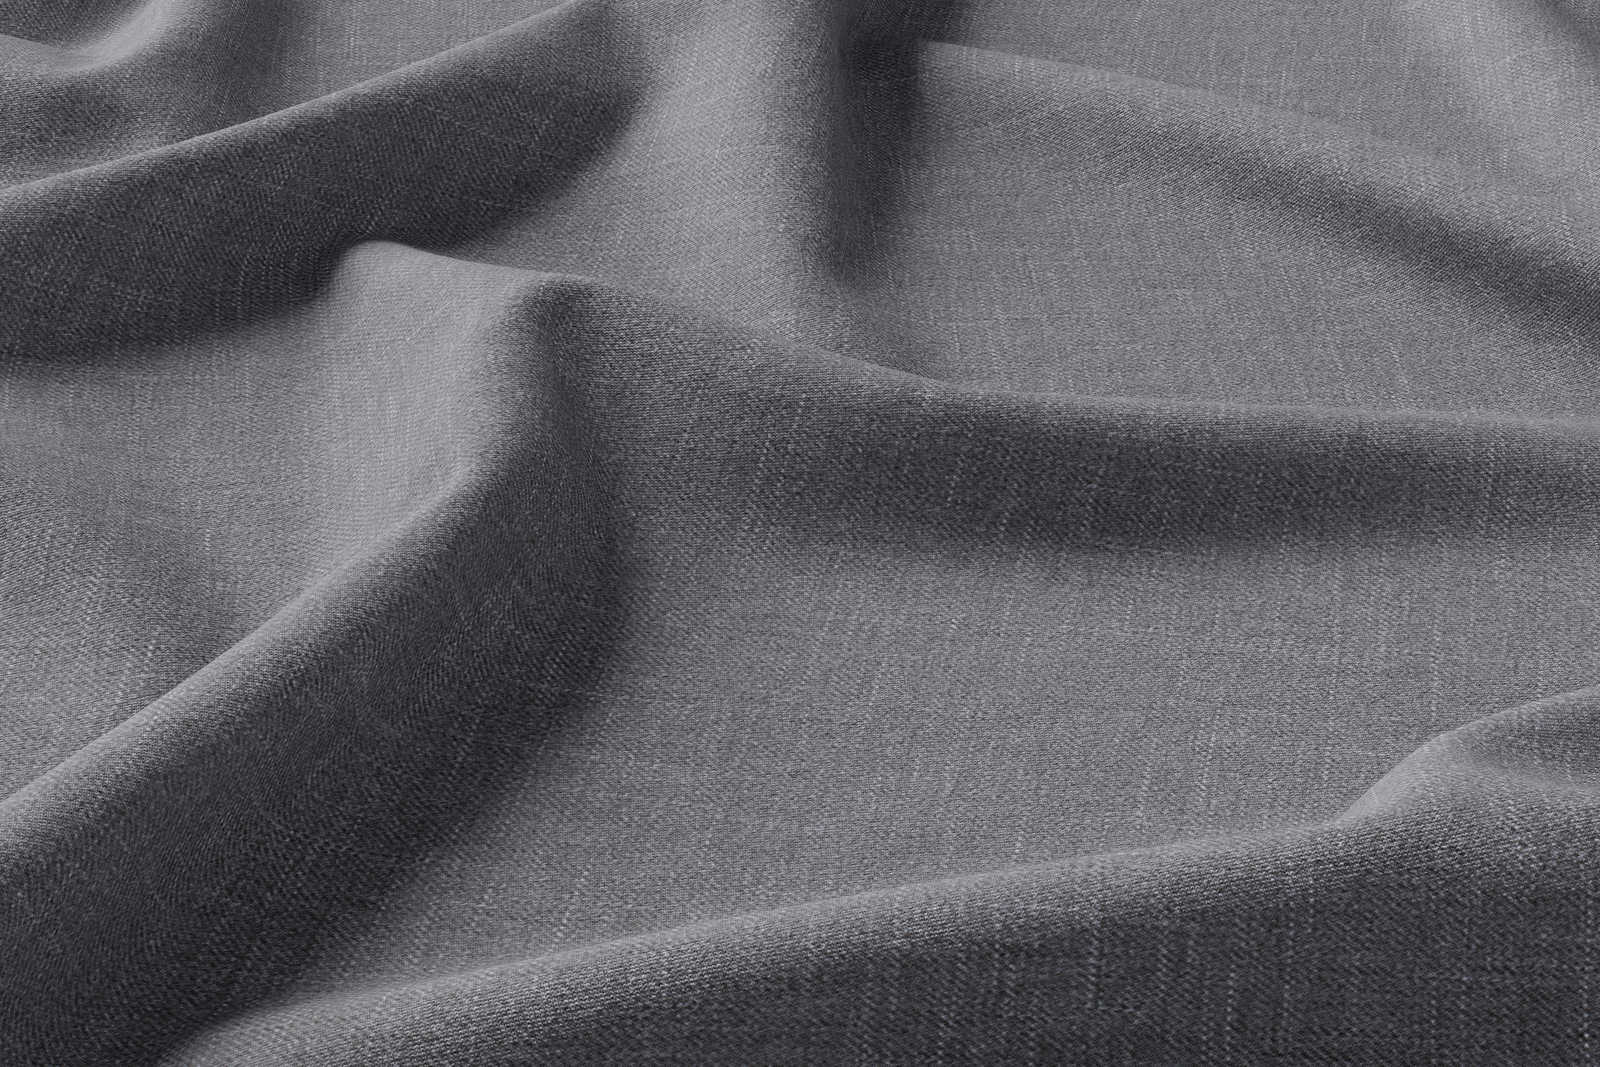             Decorative loop scarf 140 cm x 245 cm synthetic fibre graphite
        